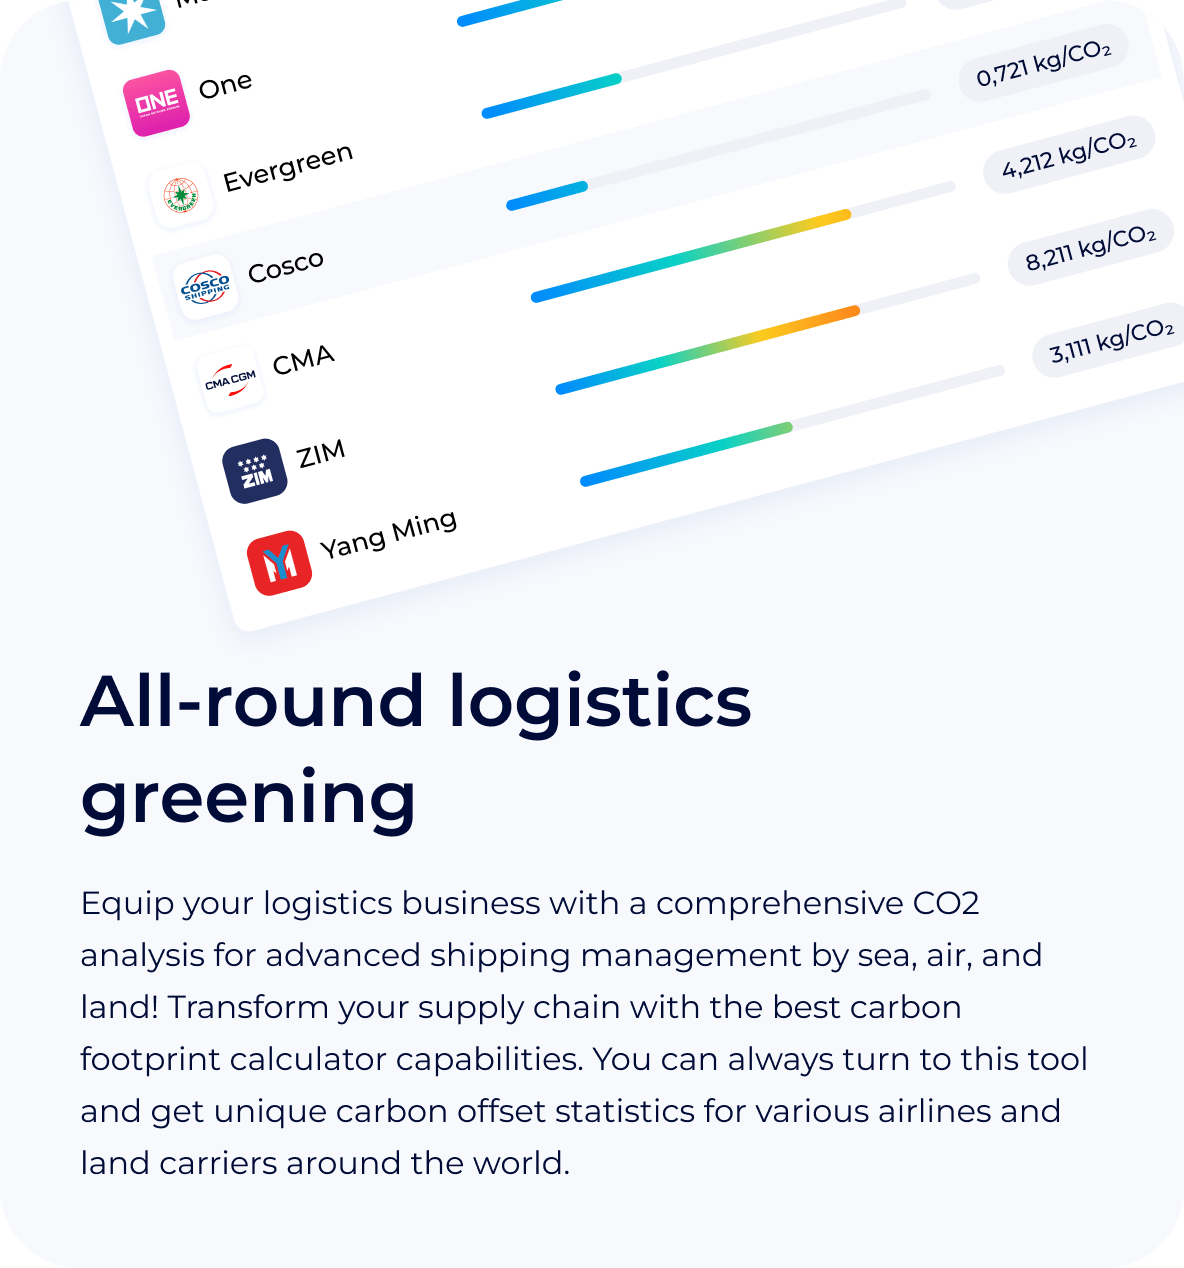 All-round logistics greening